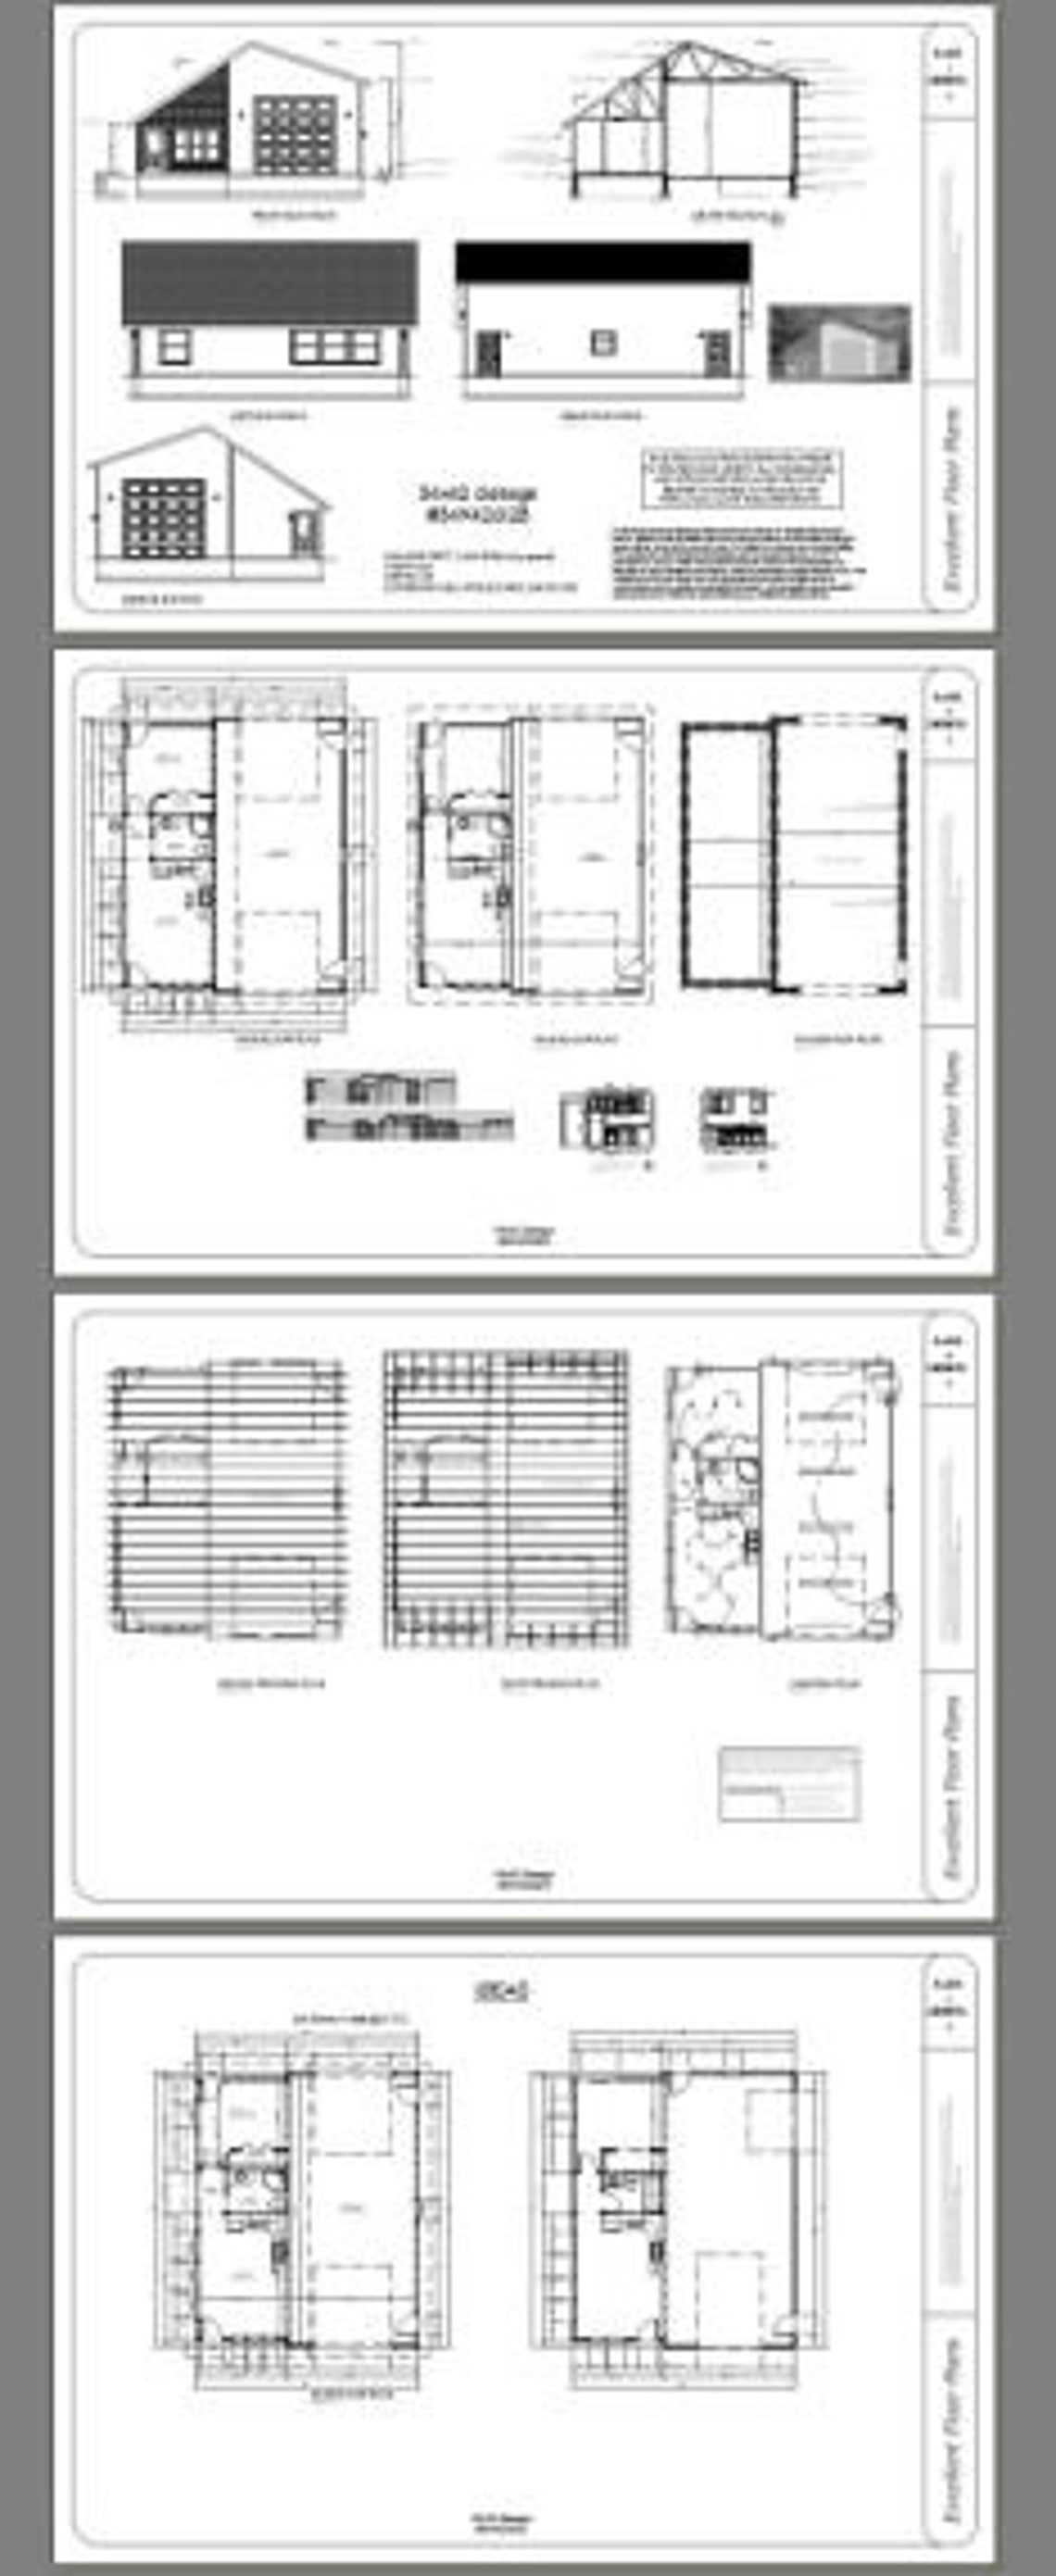 34x42 1-RV Garage 1 Bedroom, 1 Bath 1,400 Sq Ft PDF Floor Plan Instant ...